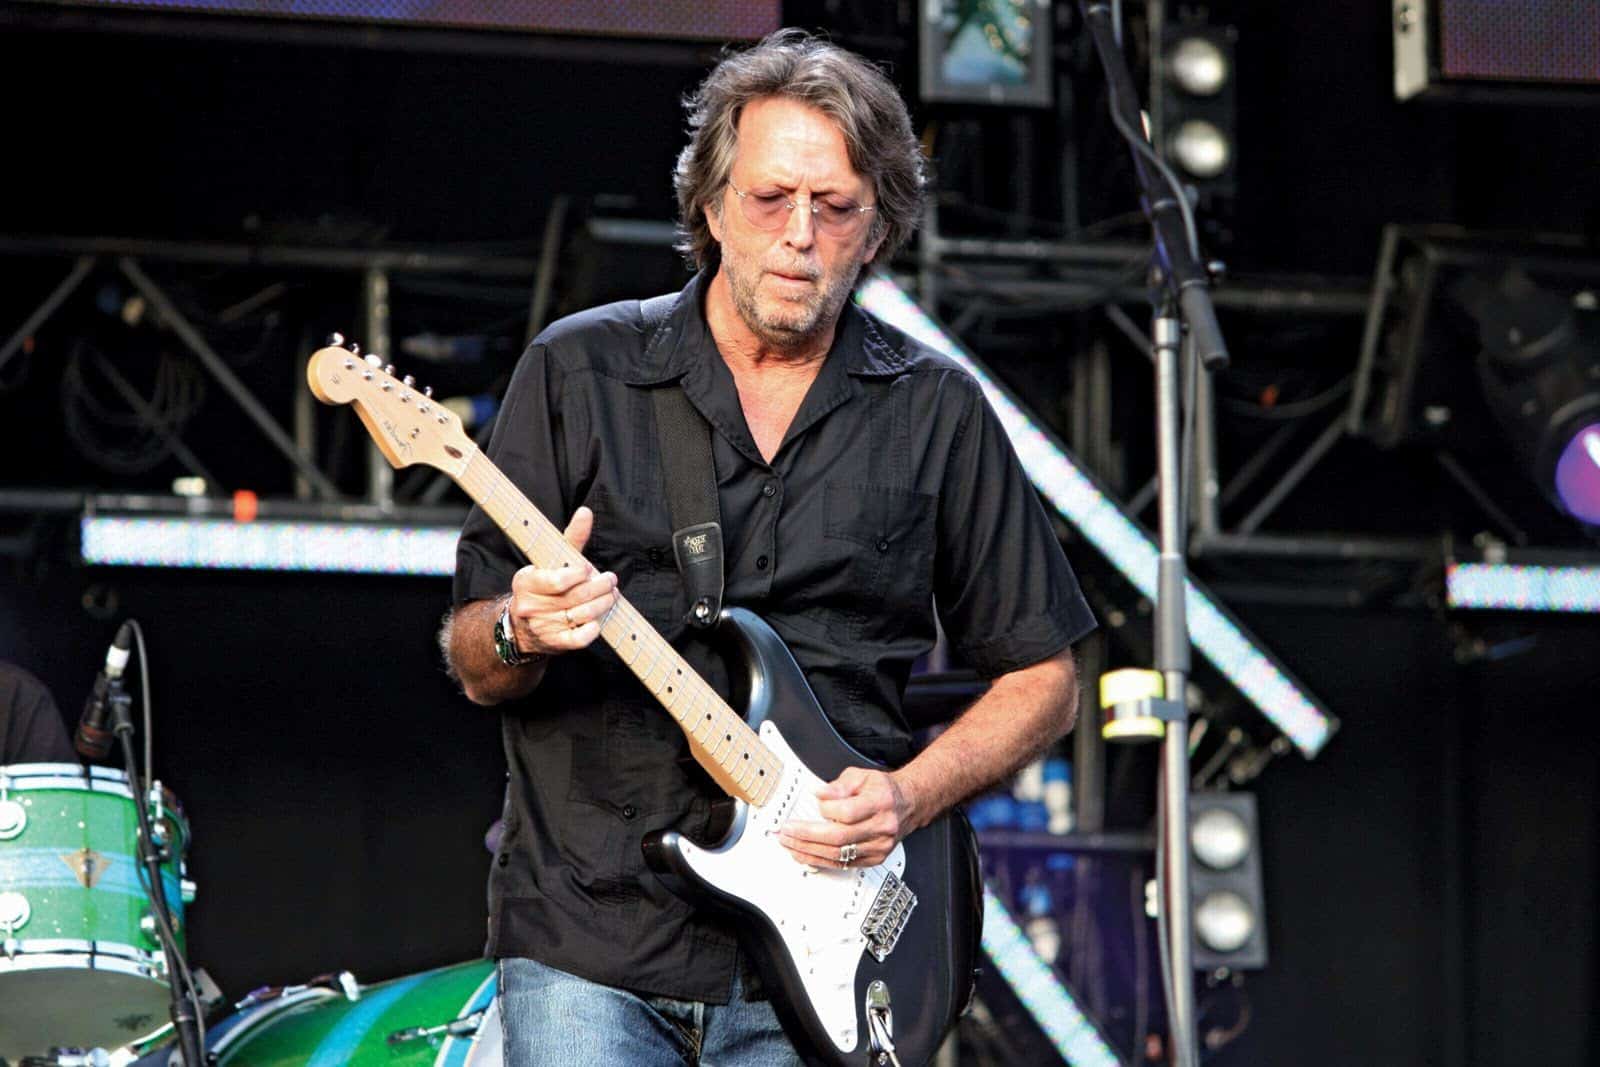 Eric Clapton – Pretending Lyrics